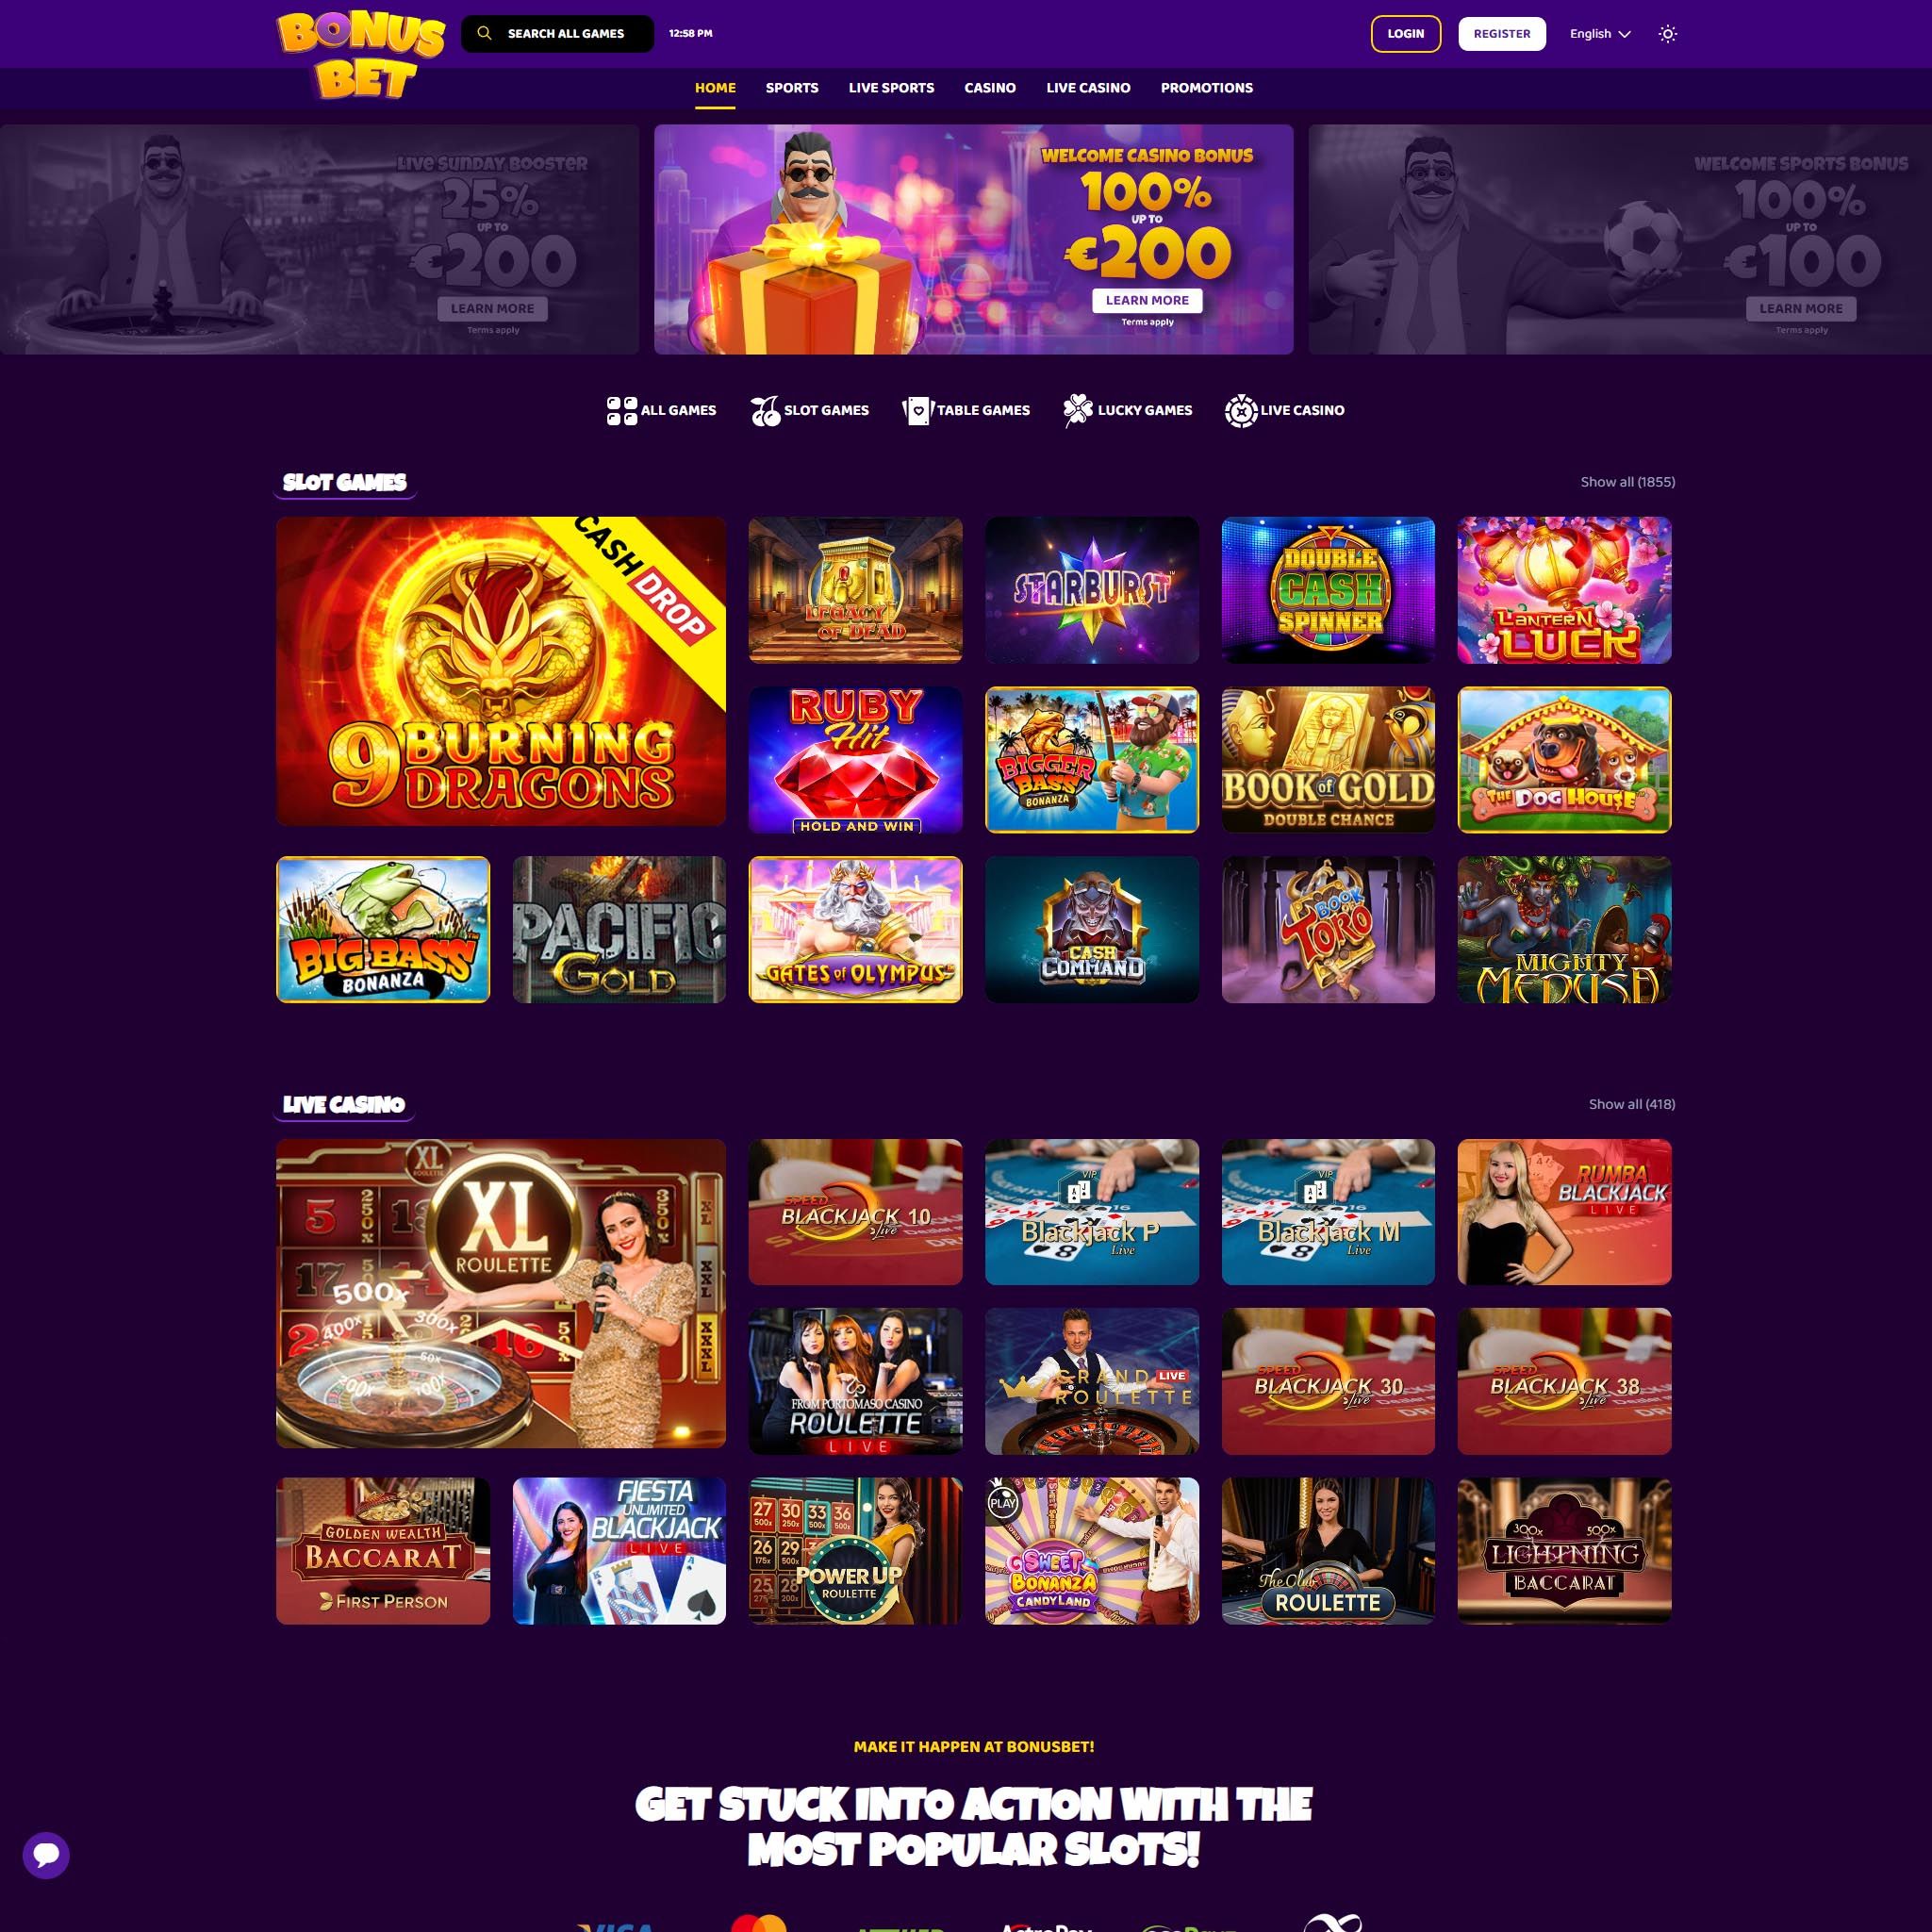 Bonusbet Casino NZ review by Mr. Gamble